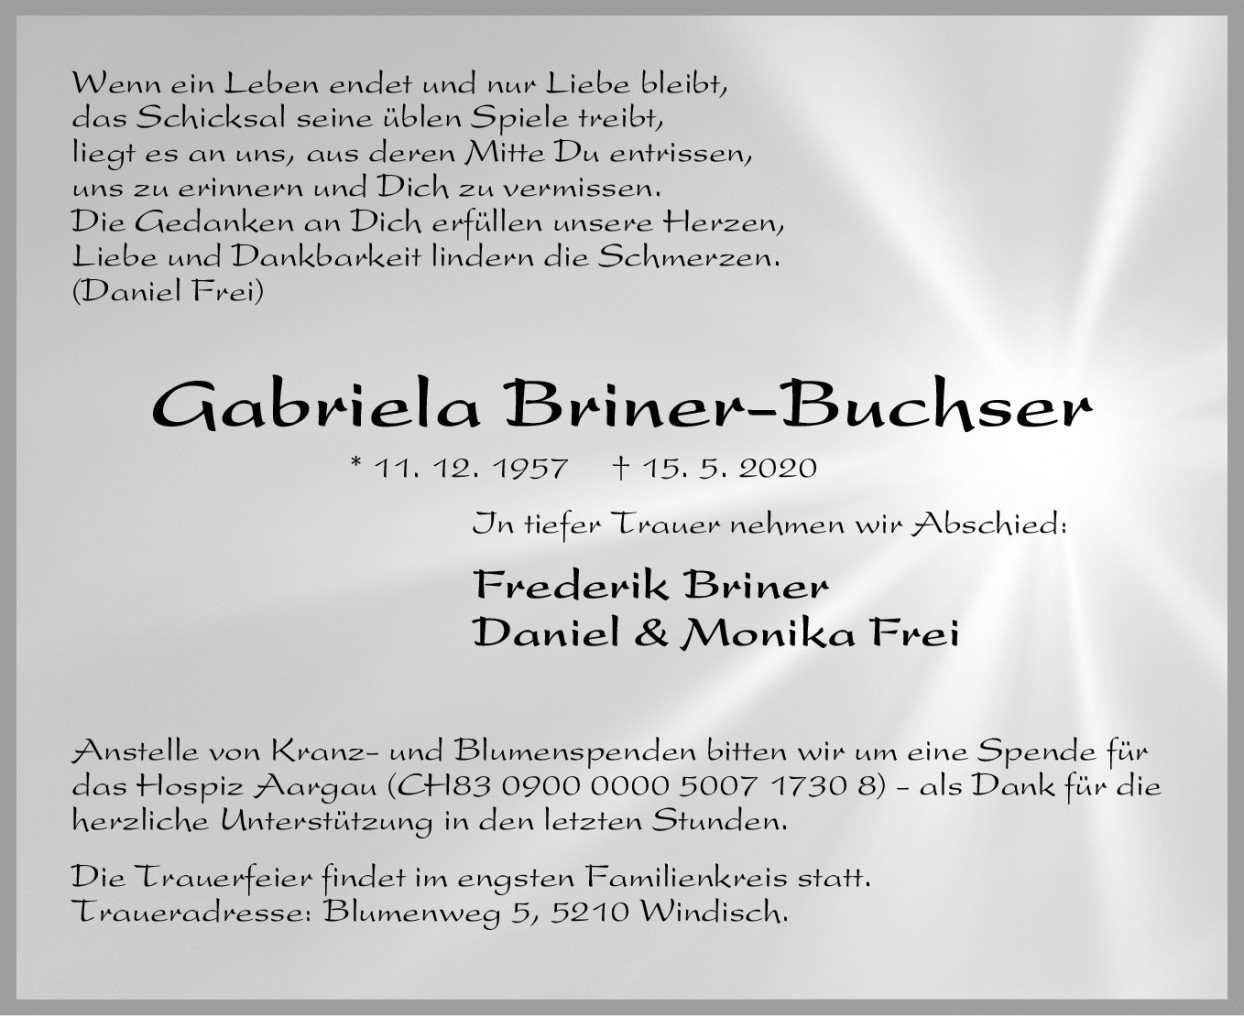 Gabriela Briner-Buchser